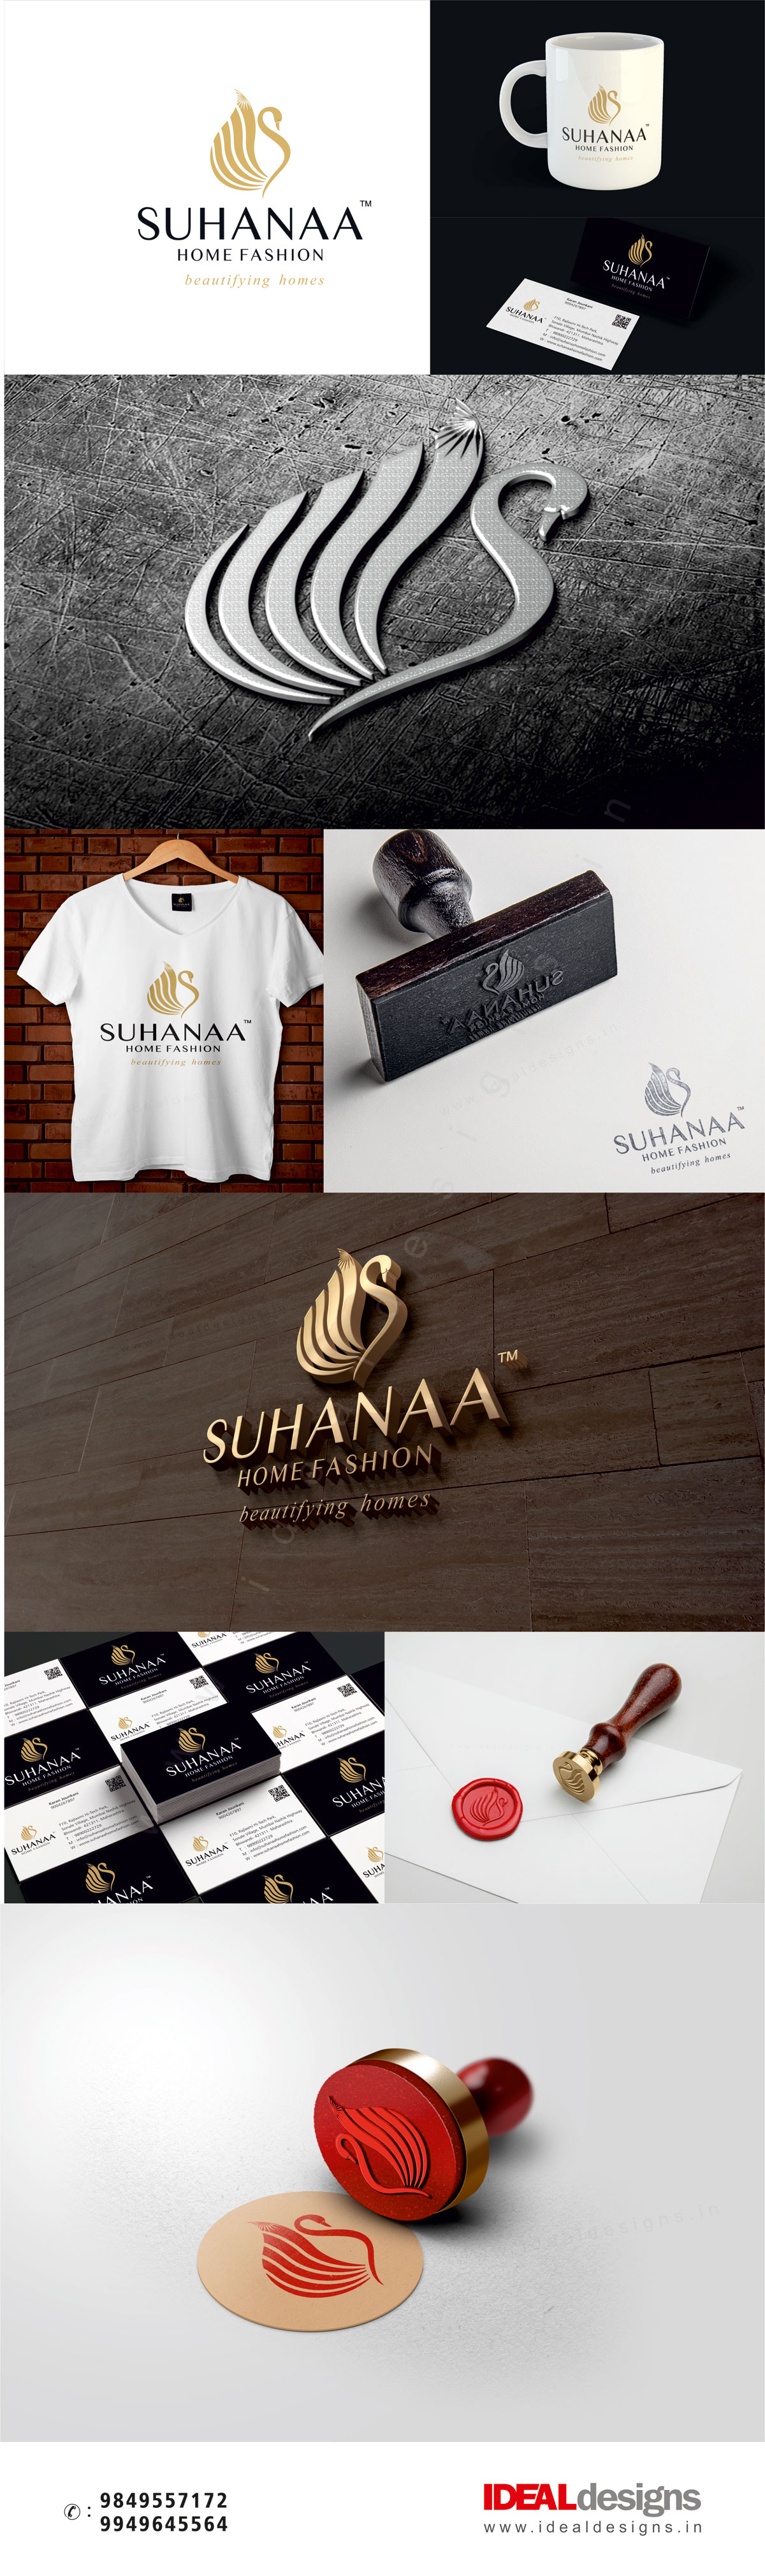 suhana-furniture-and-furnishings-branding-india,-professional-designs-hyderabad,-corporate-style-branidng-hyderabad - suhana